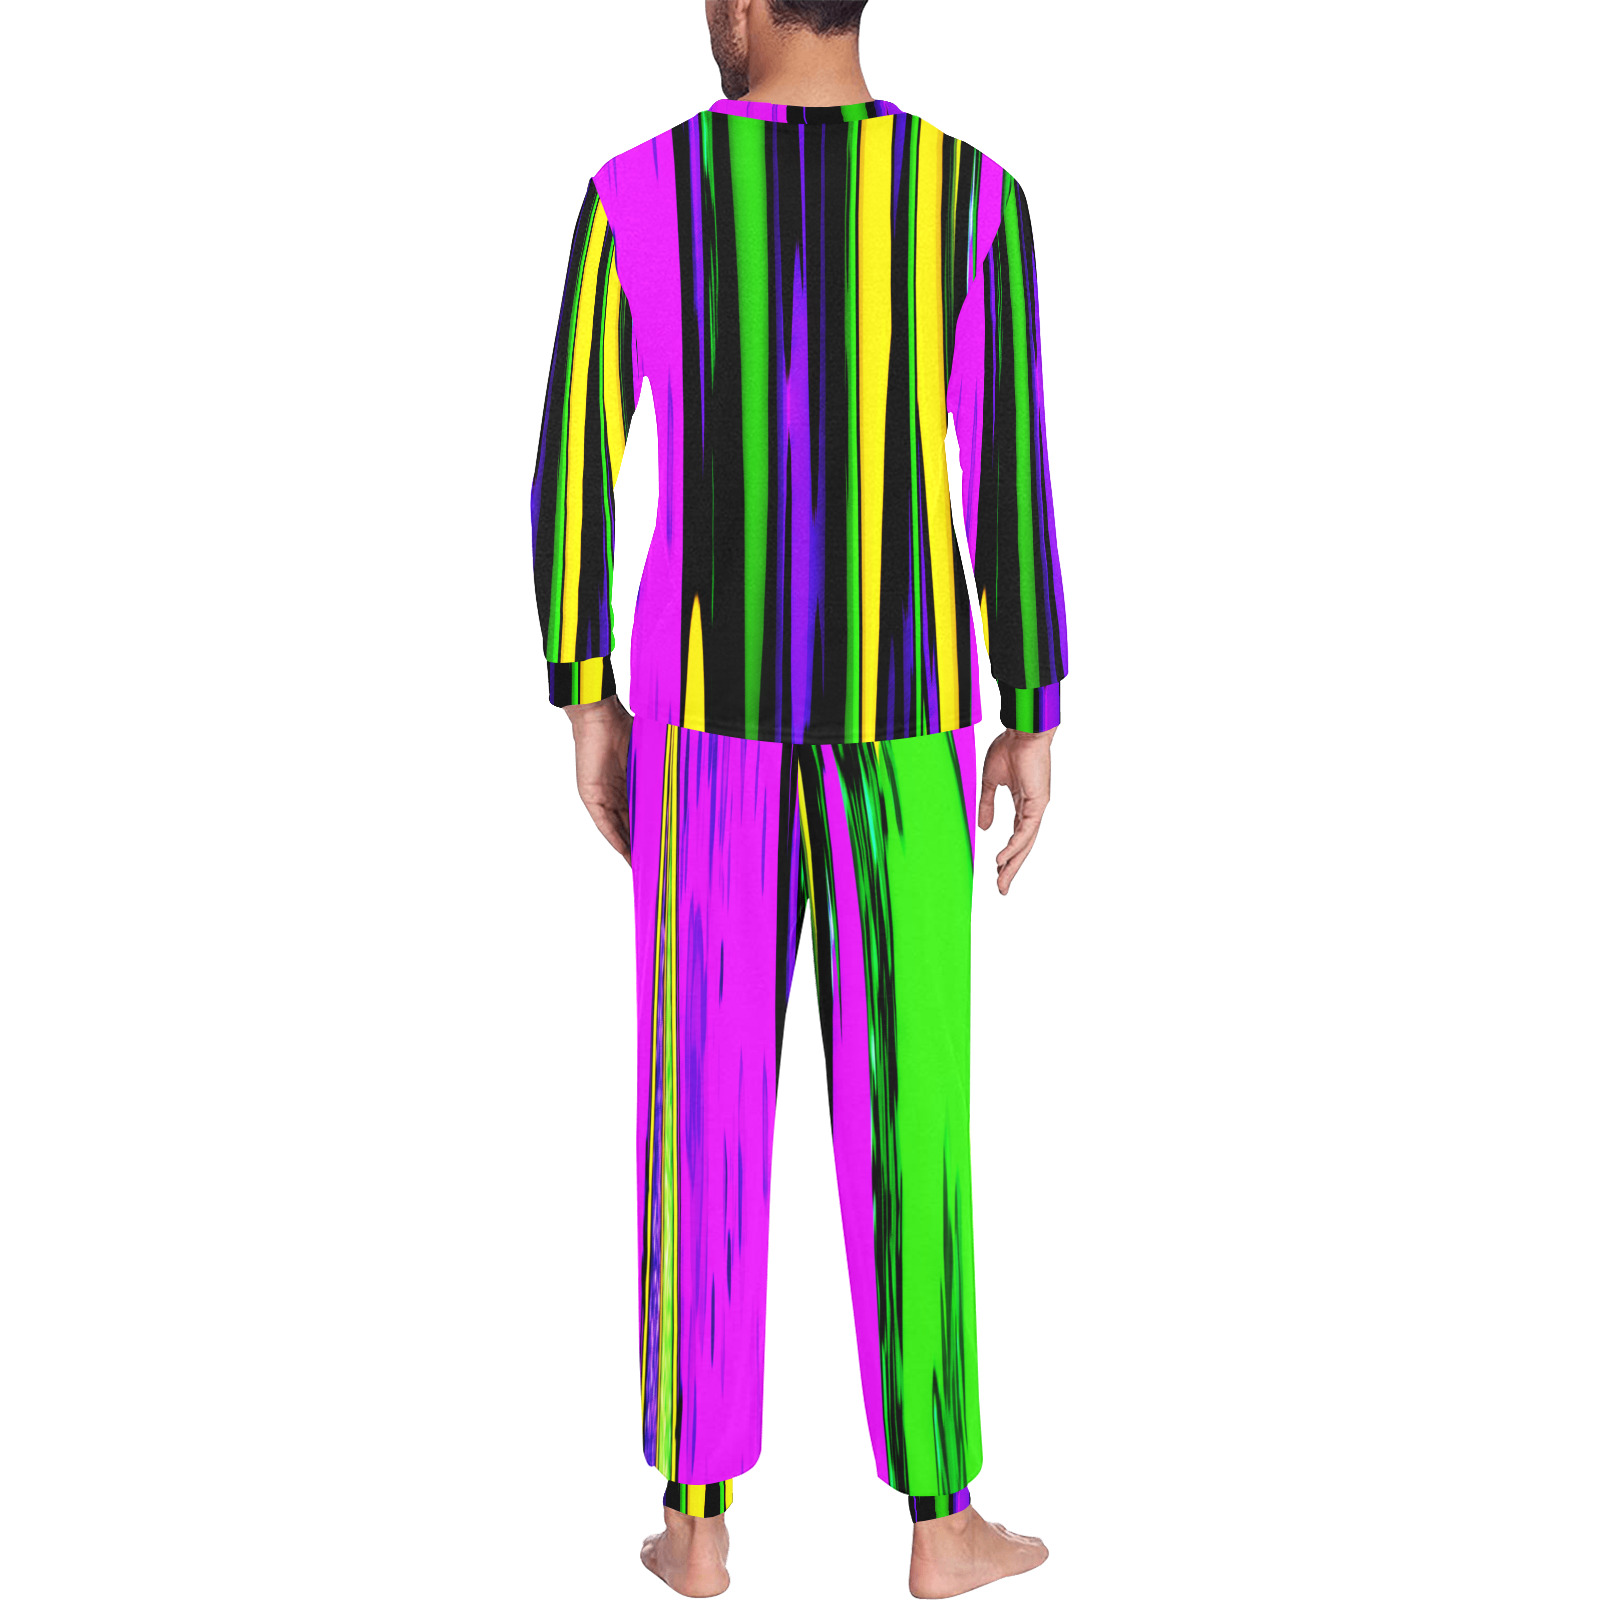 Mardi Gras Stripes Men's All Over Print Pajama Set with Custom Cuff